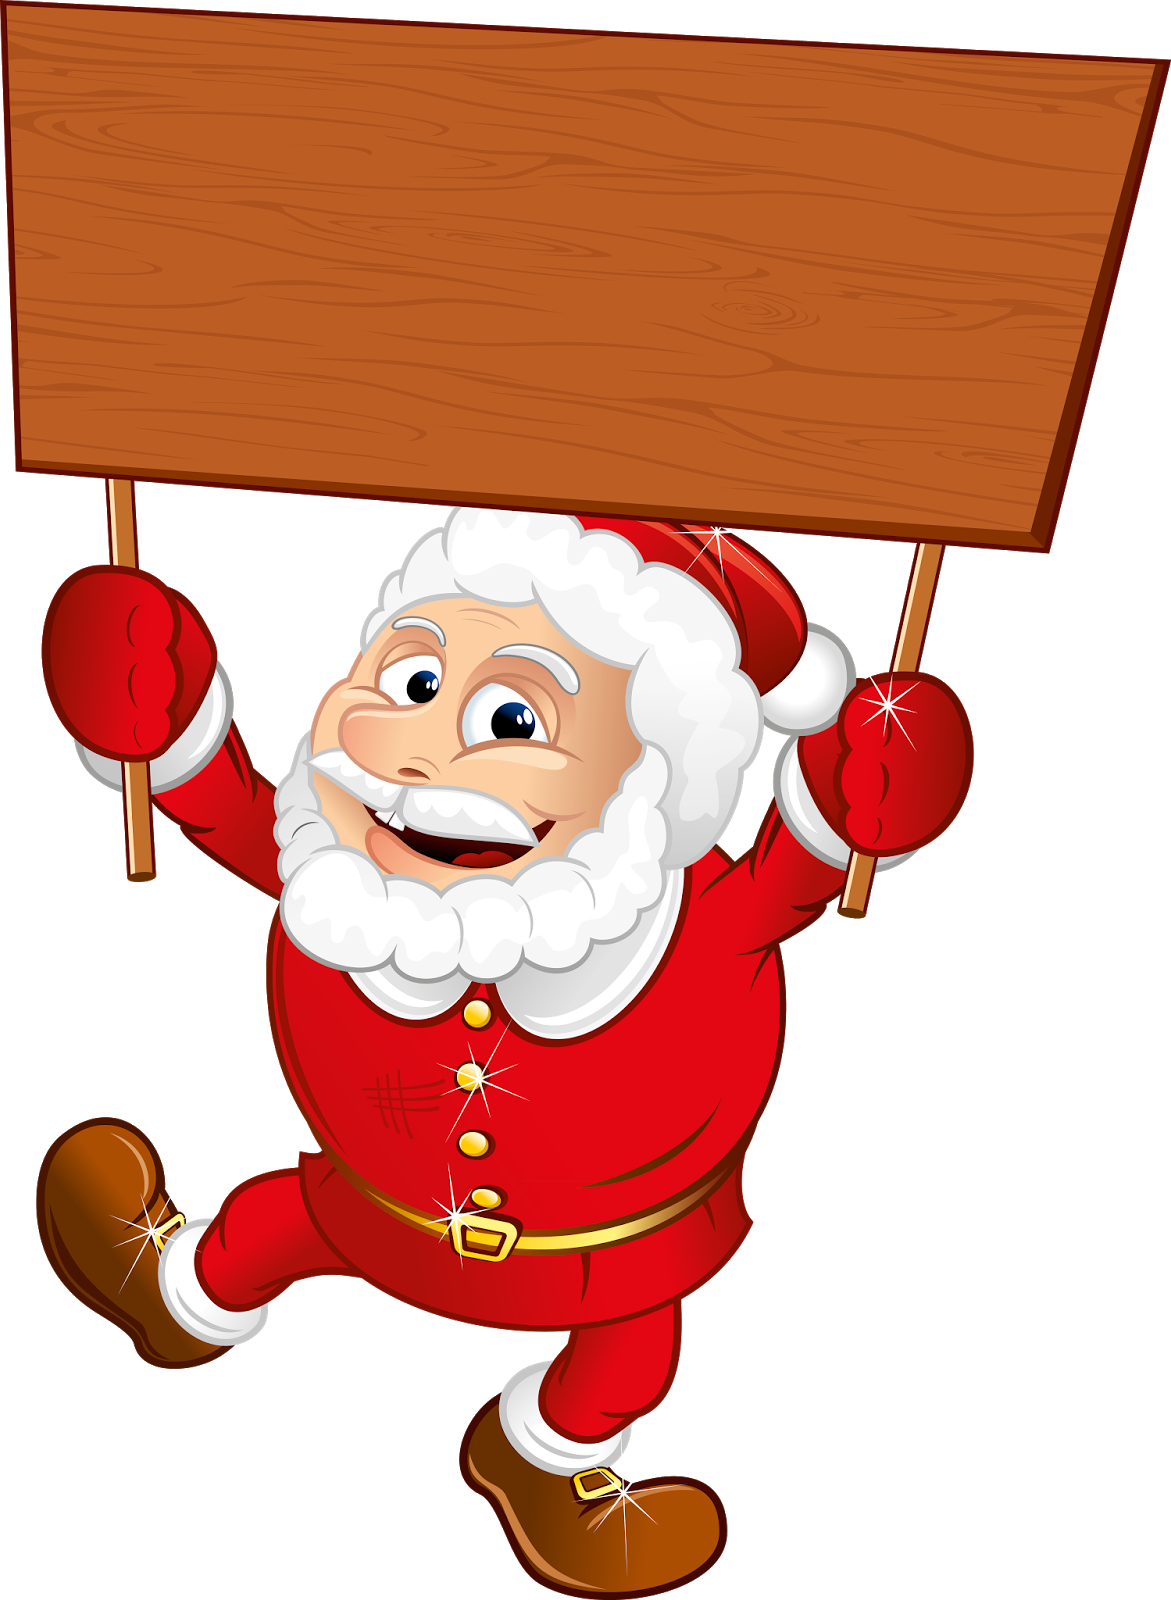 Download Saint Nicholas, Father Christmas, Santos, Free Frames, - Drunk Santa  Cartoon PNG Image with No Background 